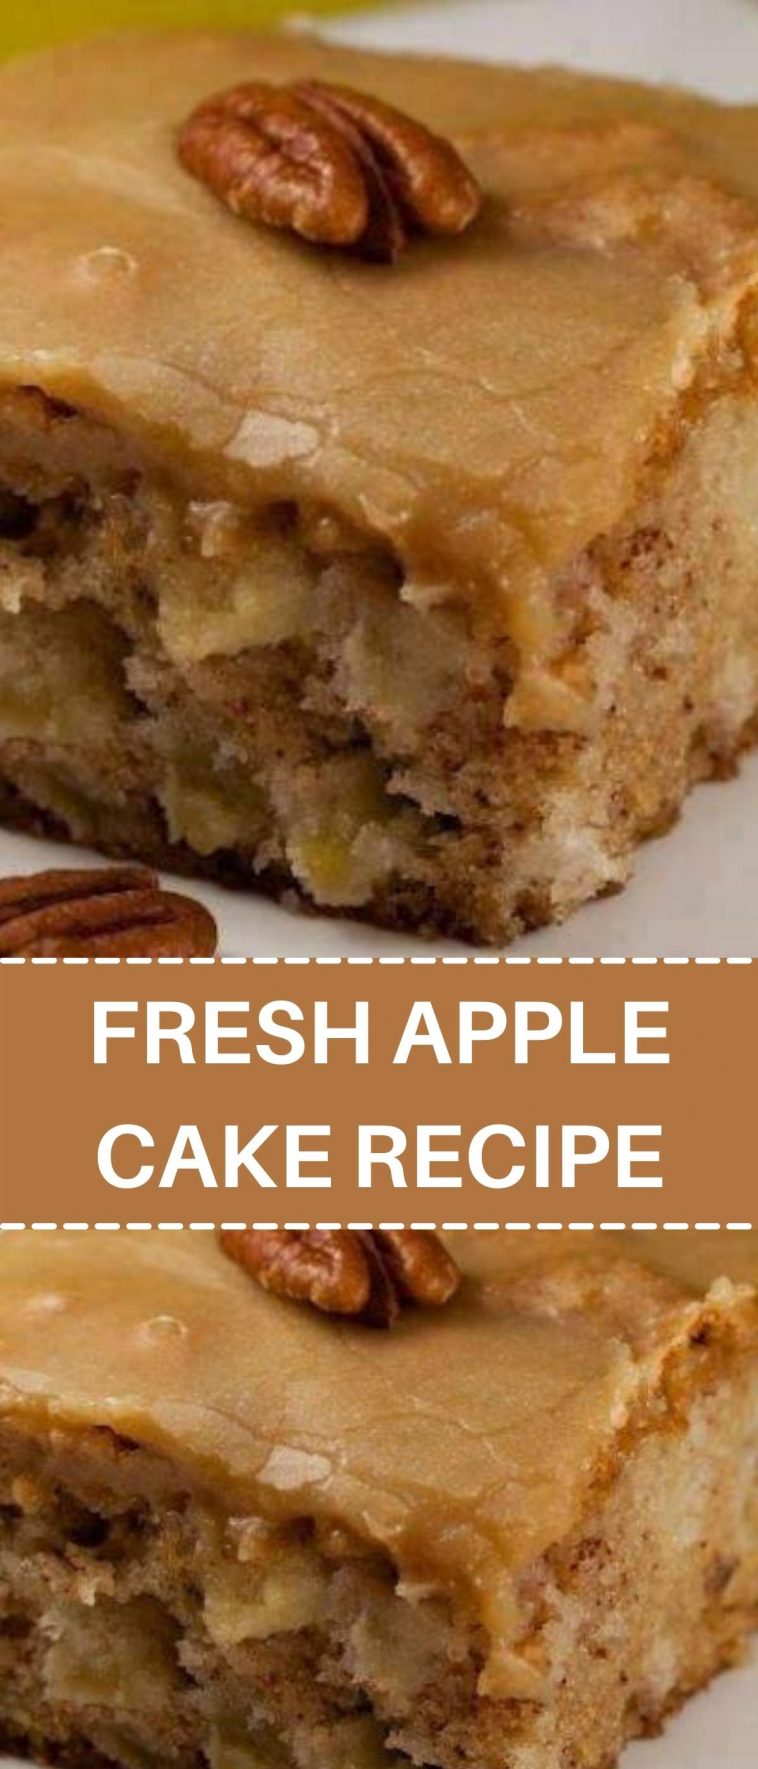 FRESH APPLE CAKE RECIPE